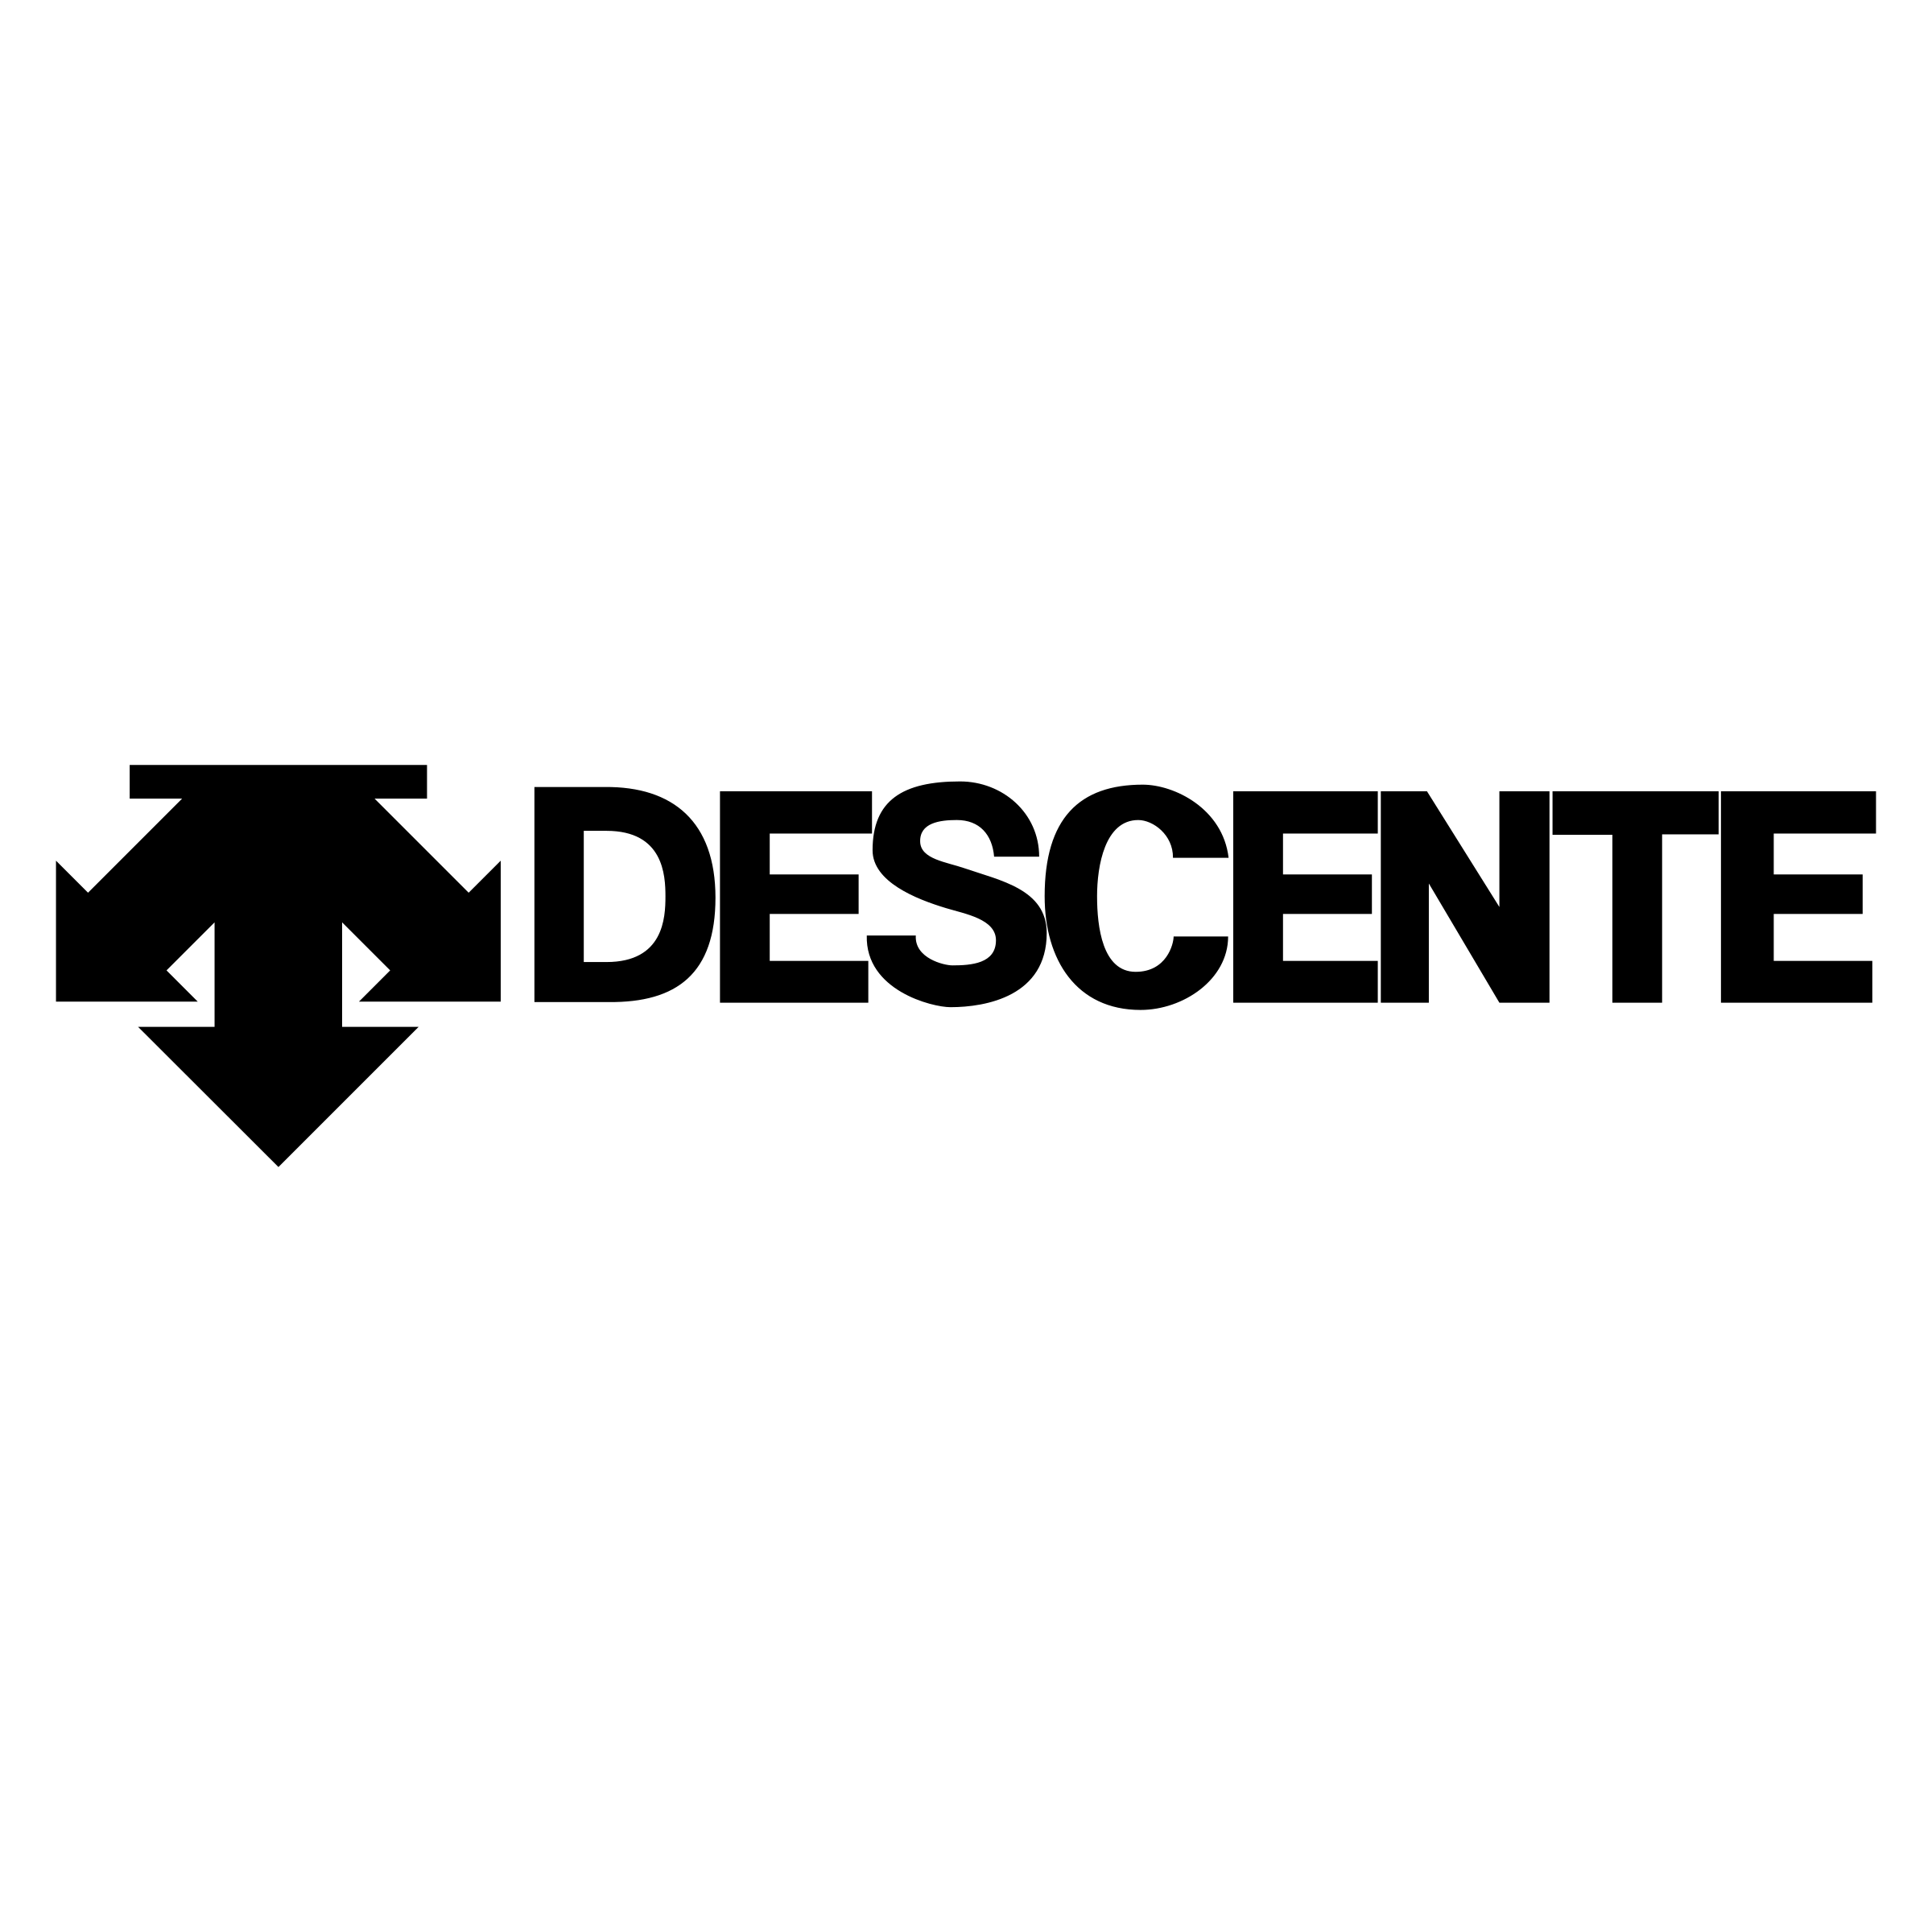 Descente Logo - Descente Logo PNG Transparent & SVG Vector